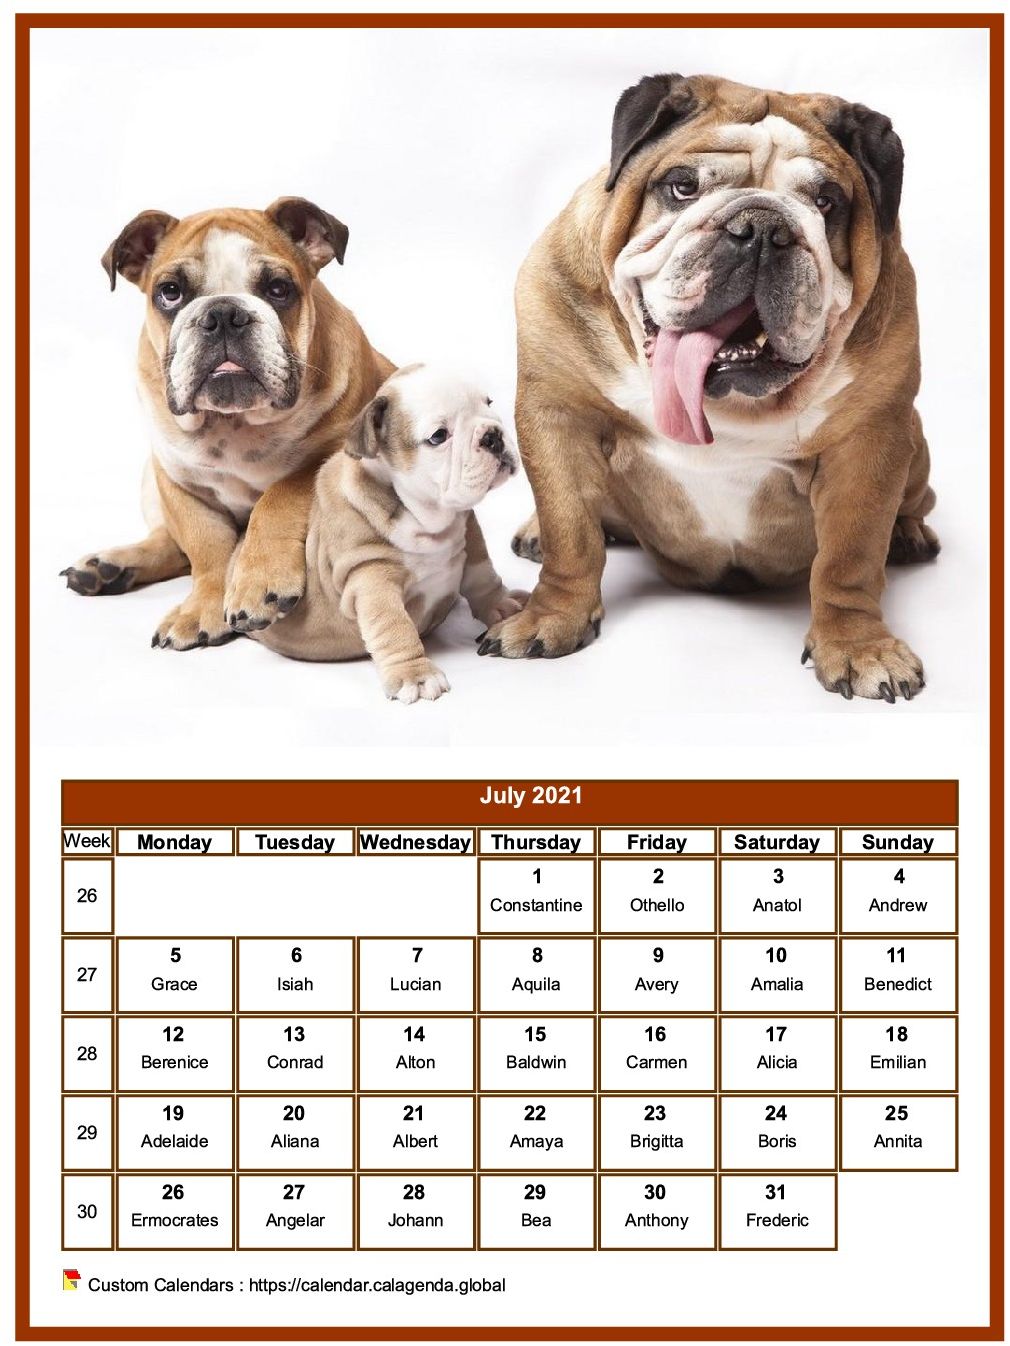 Calendar July 2021 dogs